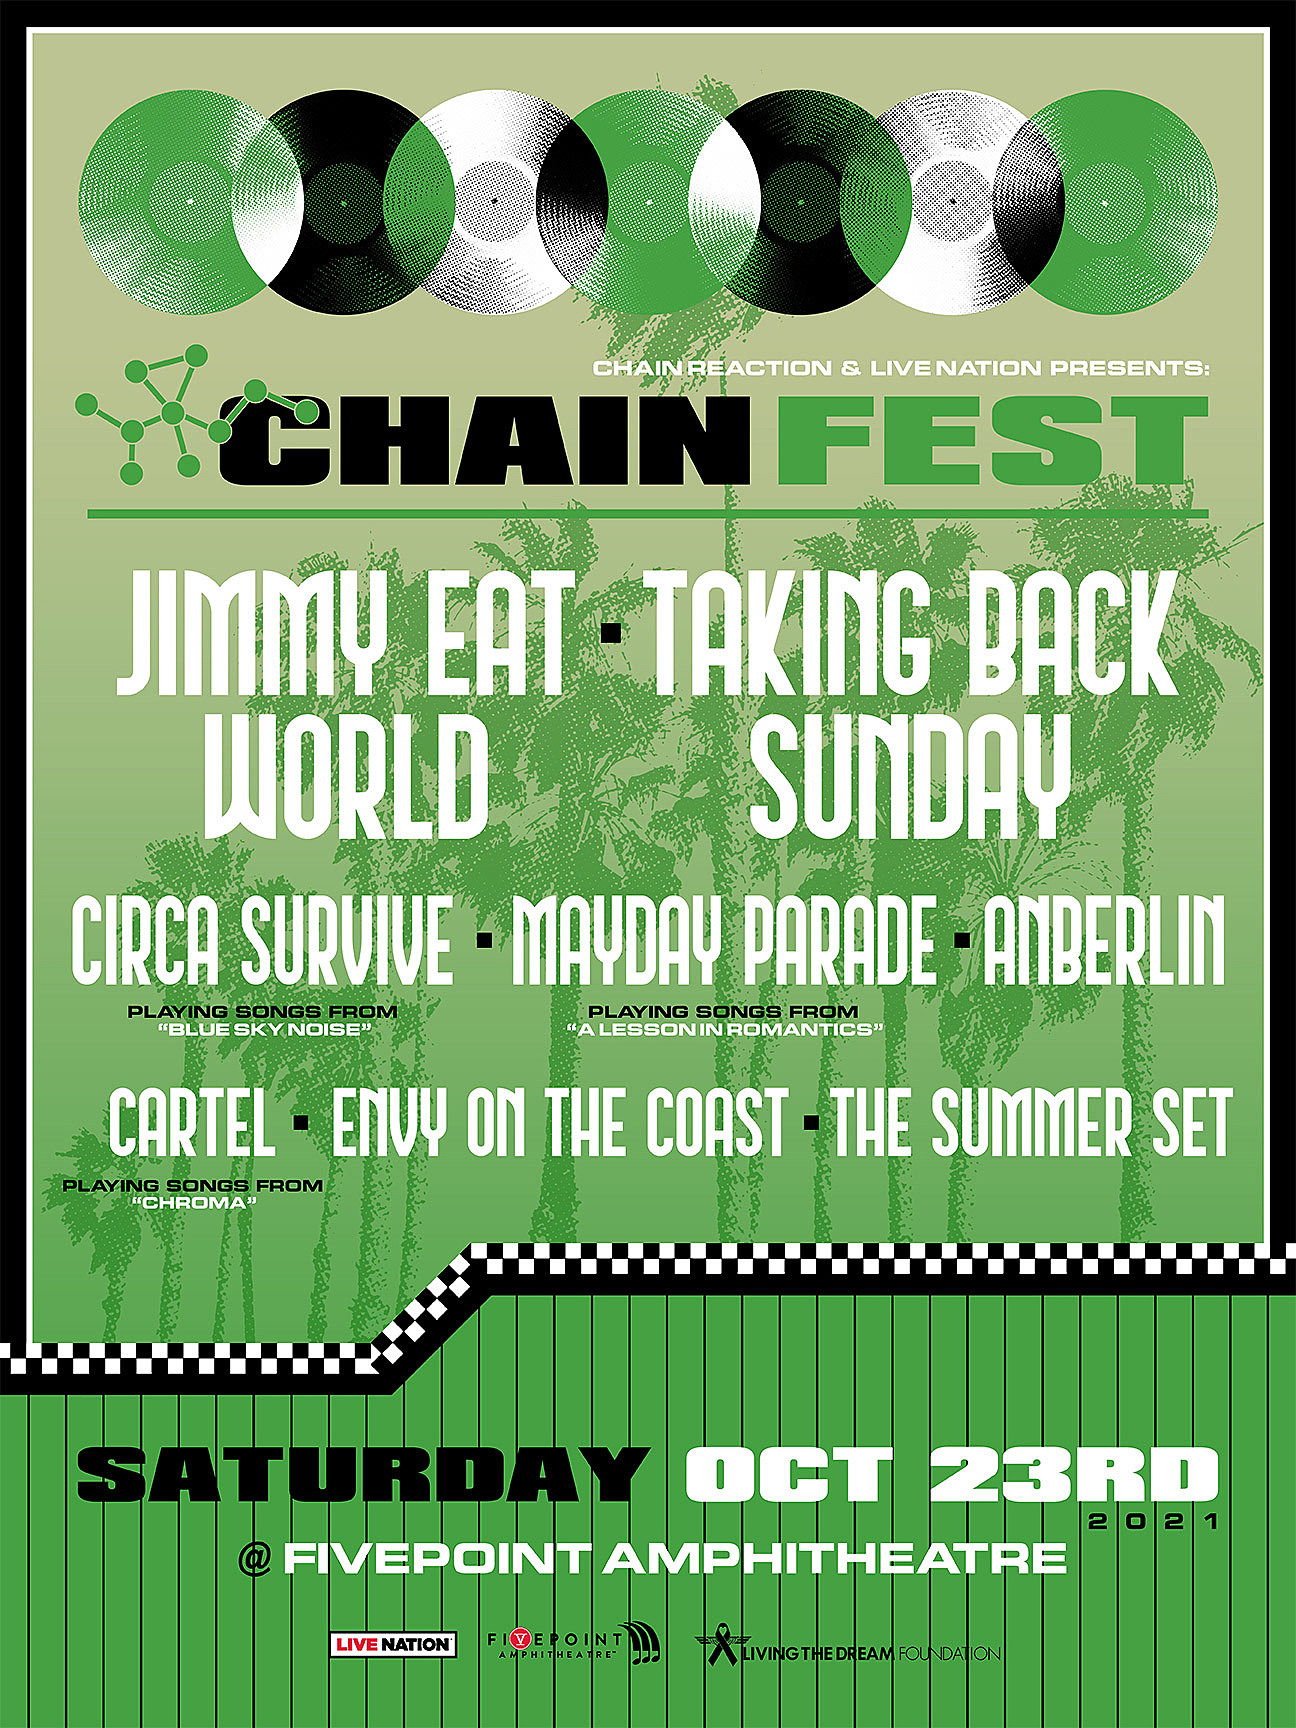 Chain Fest w/ Jimmy Eat World, Taking Back Sunday & more happens 